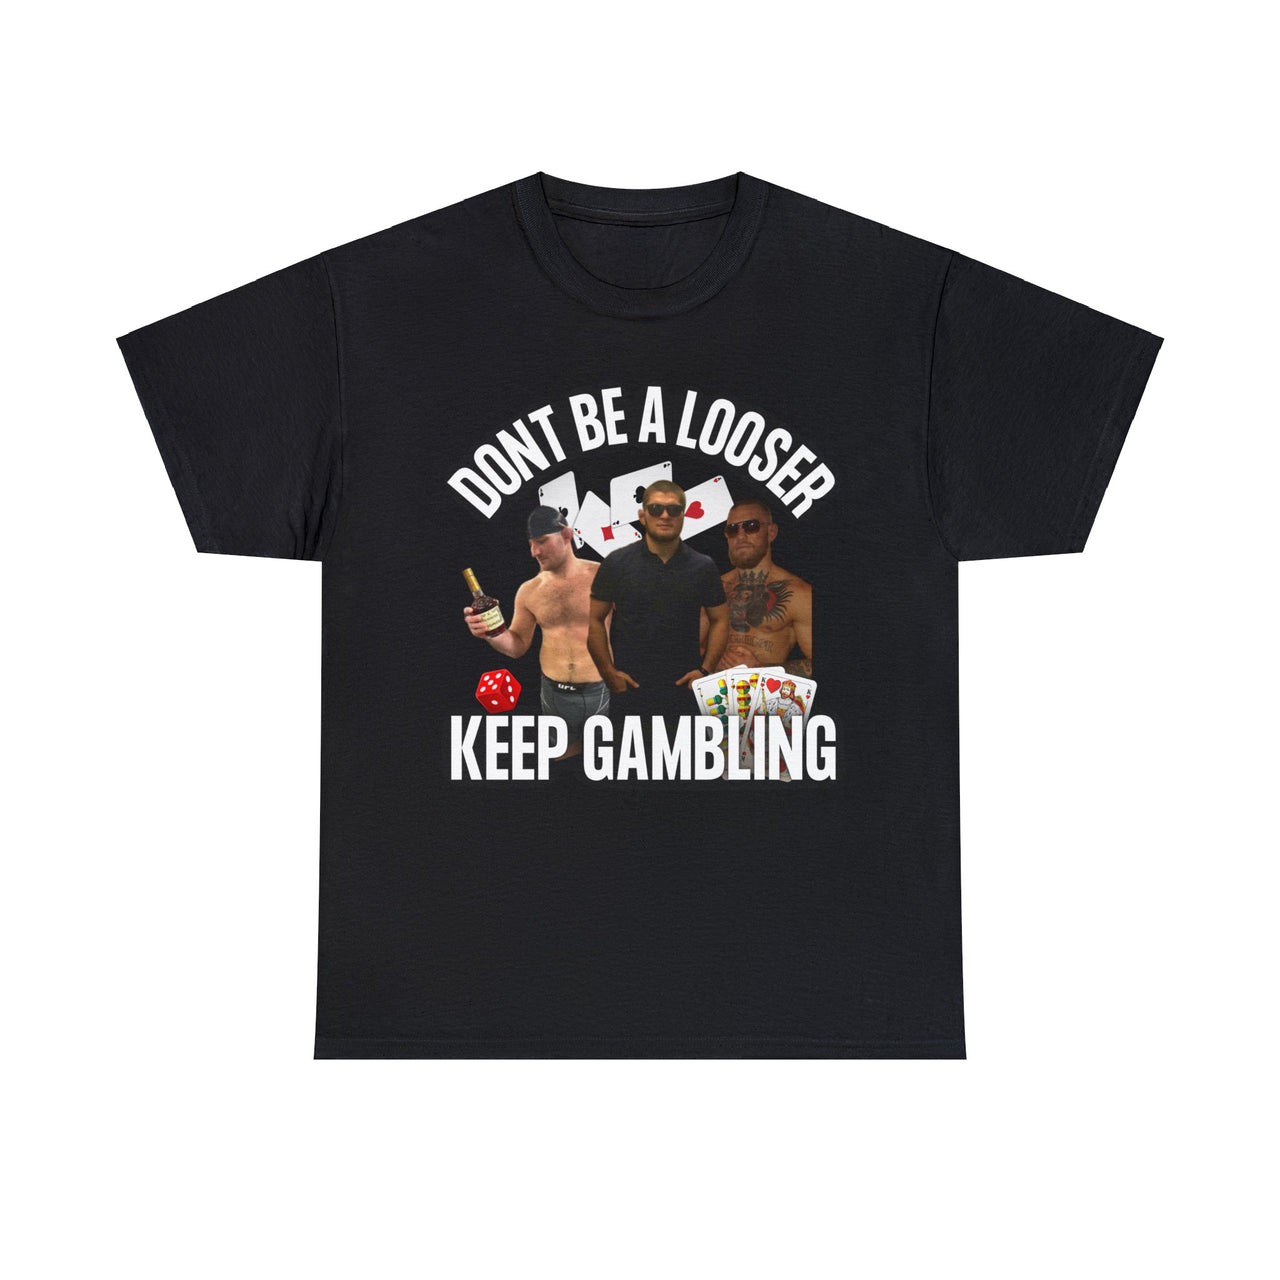 Keep Gambling T-shirt